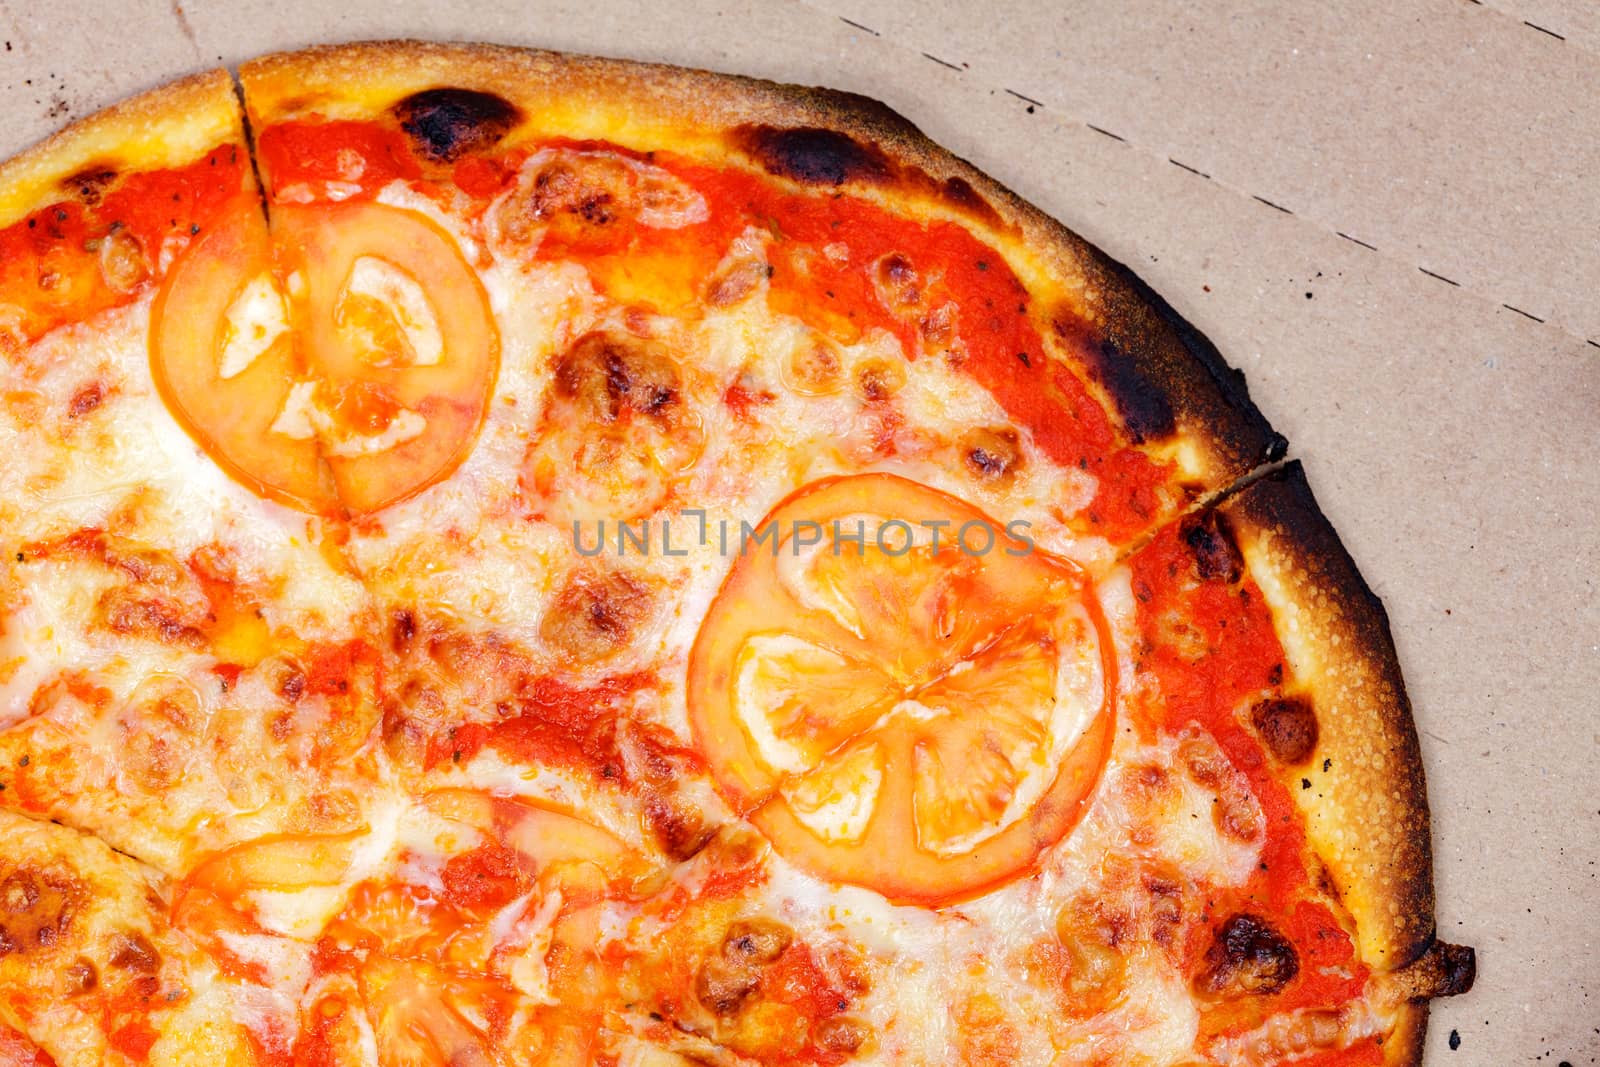 Closeup shot of burnt pizza in a carton box